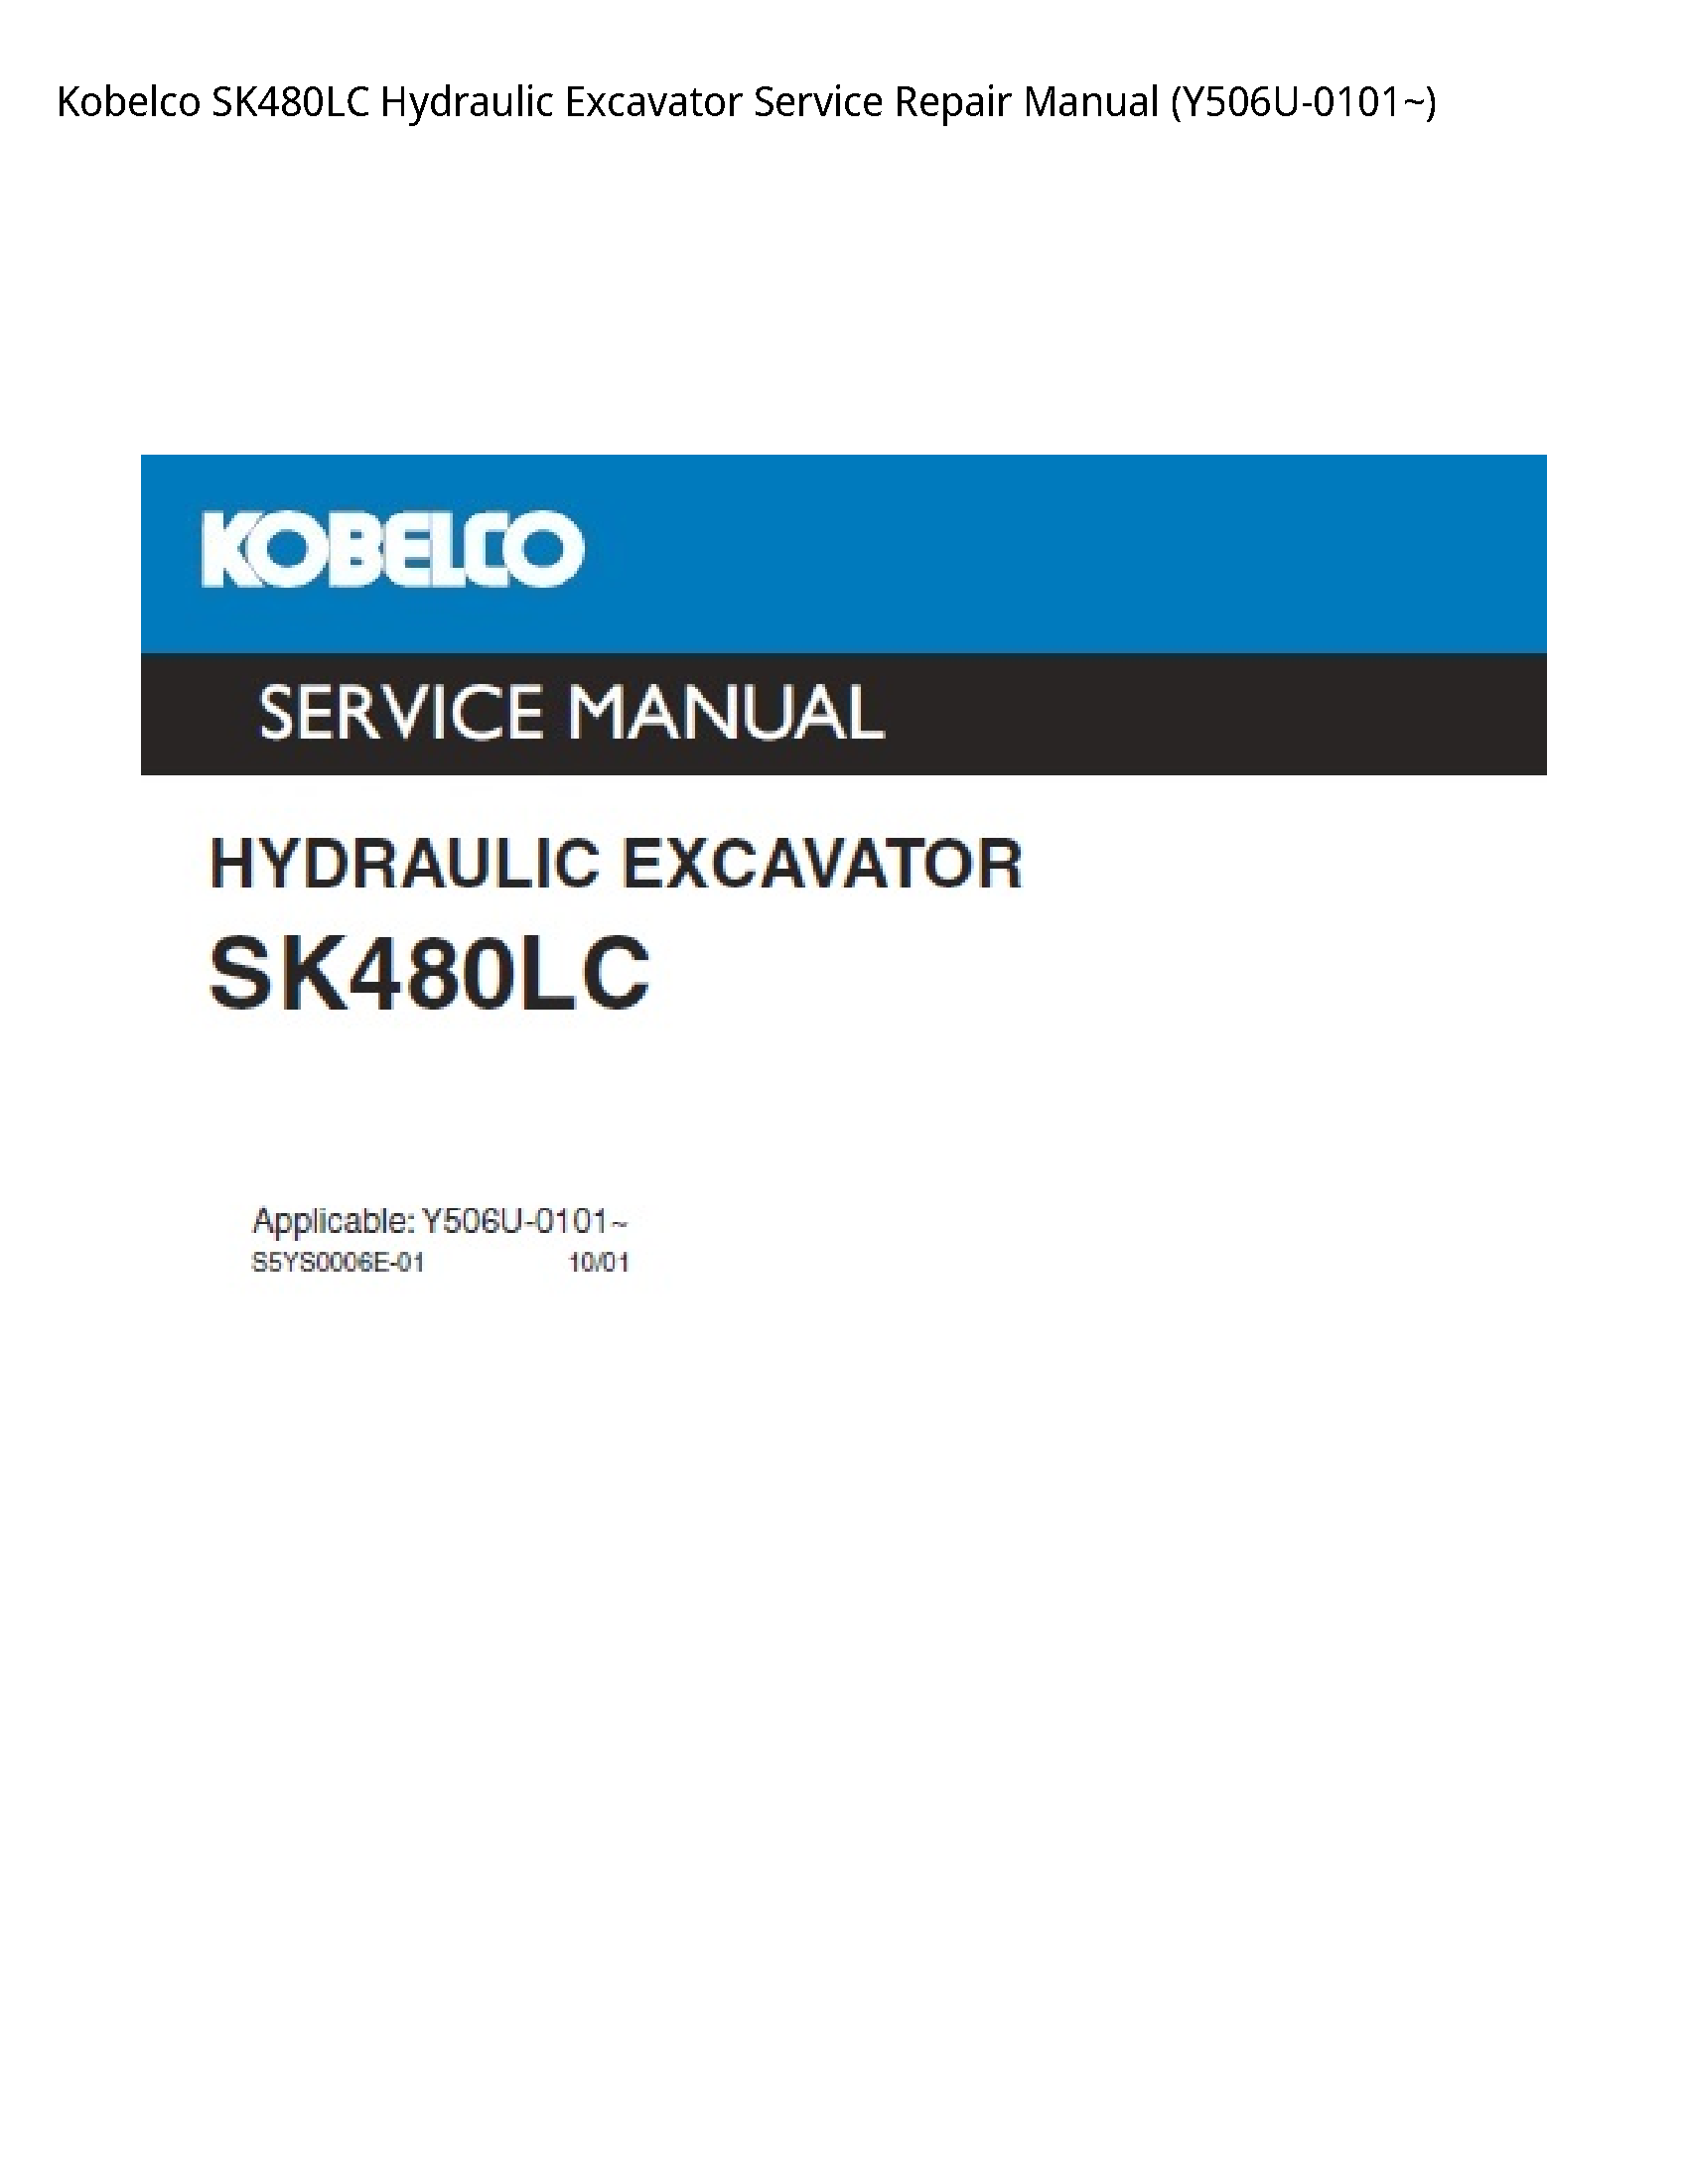 Kobelco SK480LC Hydraulic Excavator manual